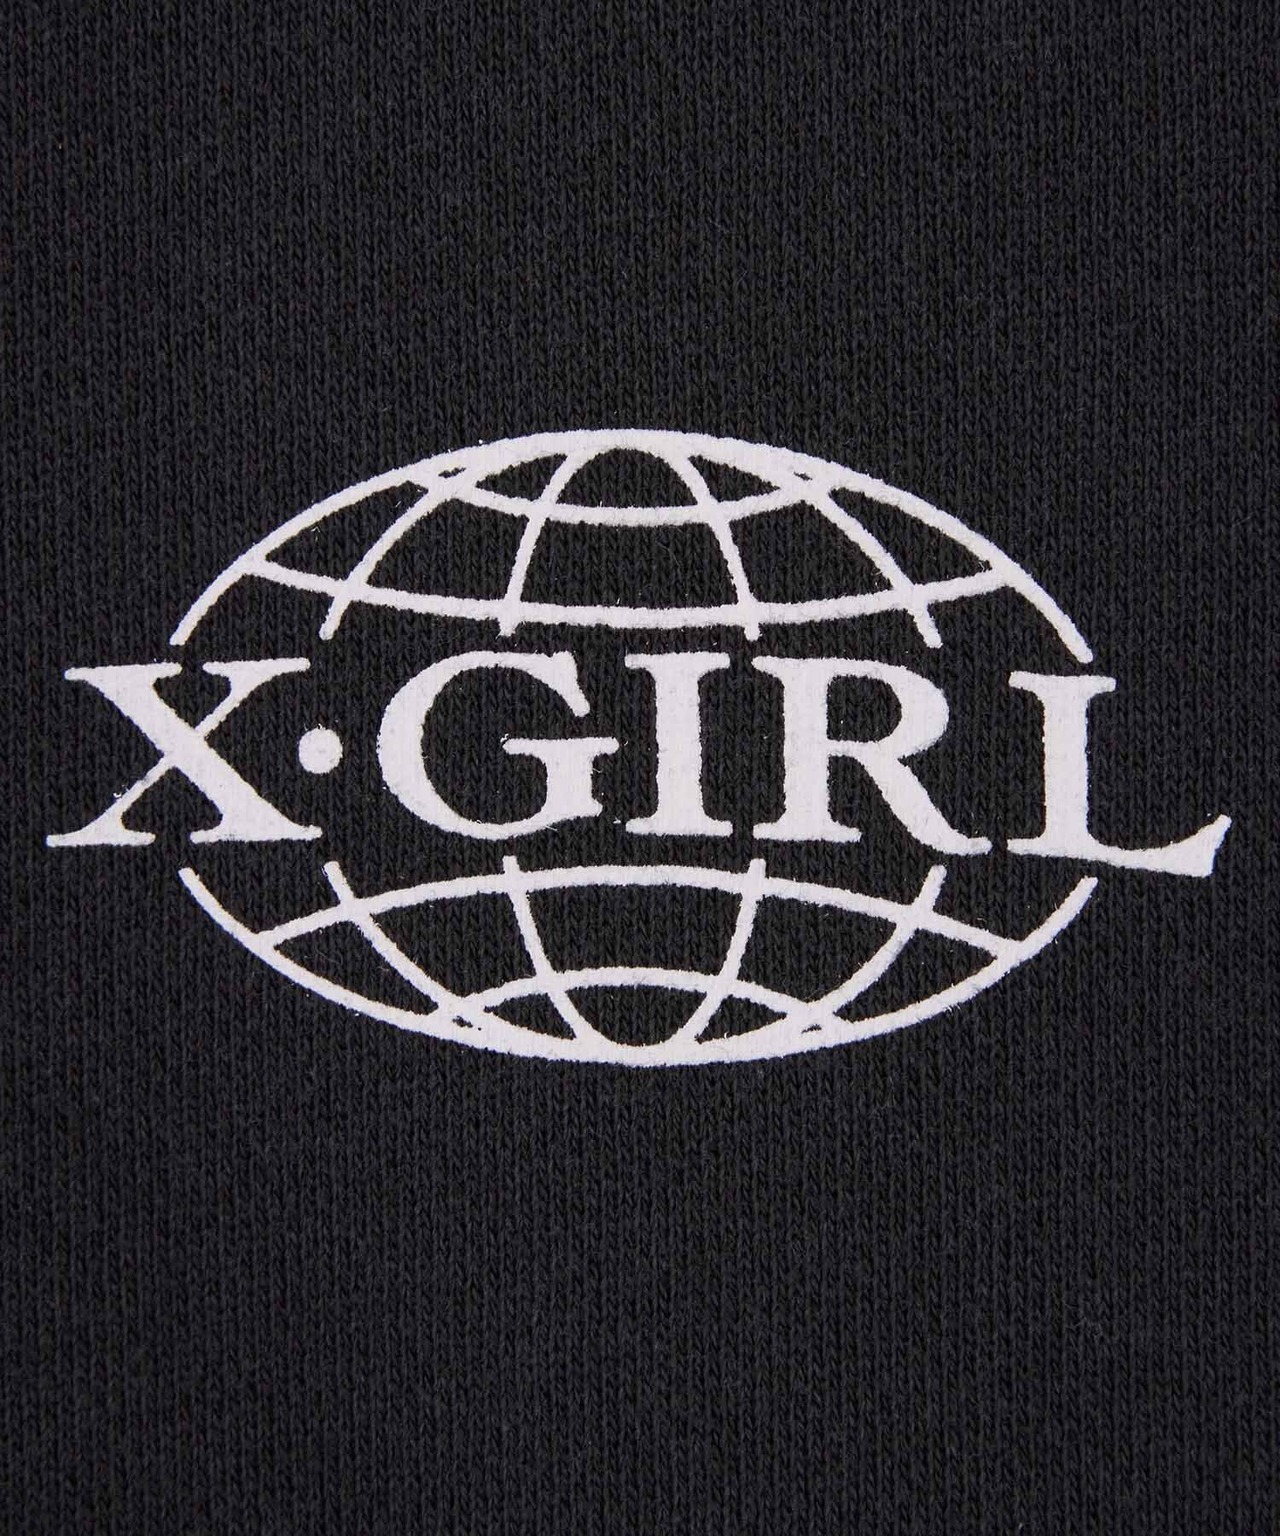 【X-girl】X-GIRL WORLD LOGO ZIP UP SWEAT VEST【エックスガール】